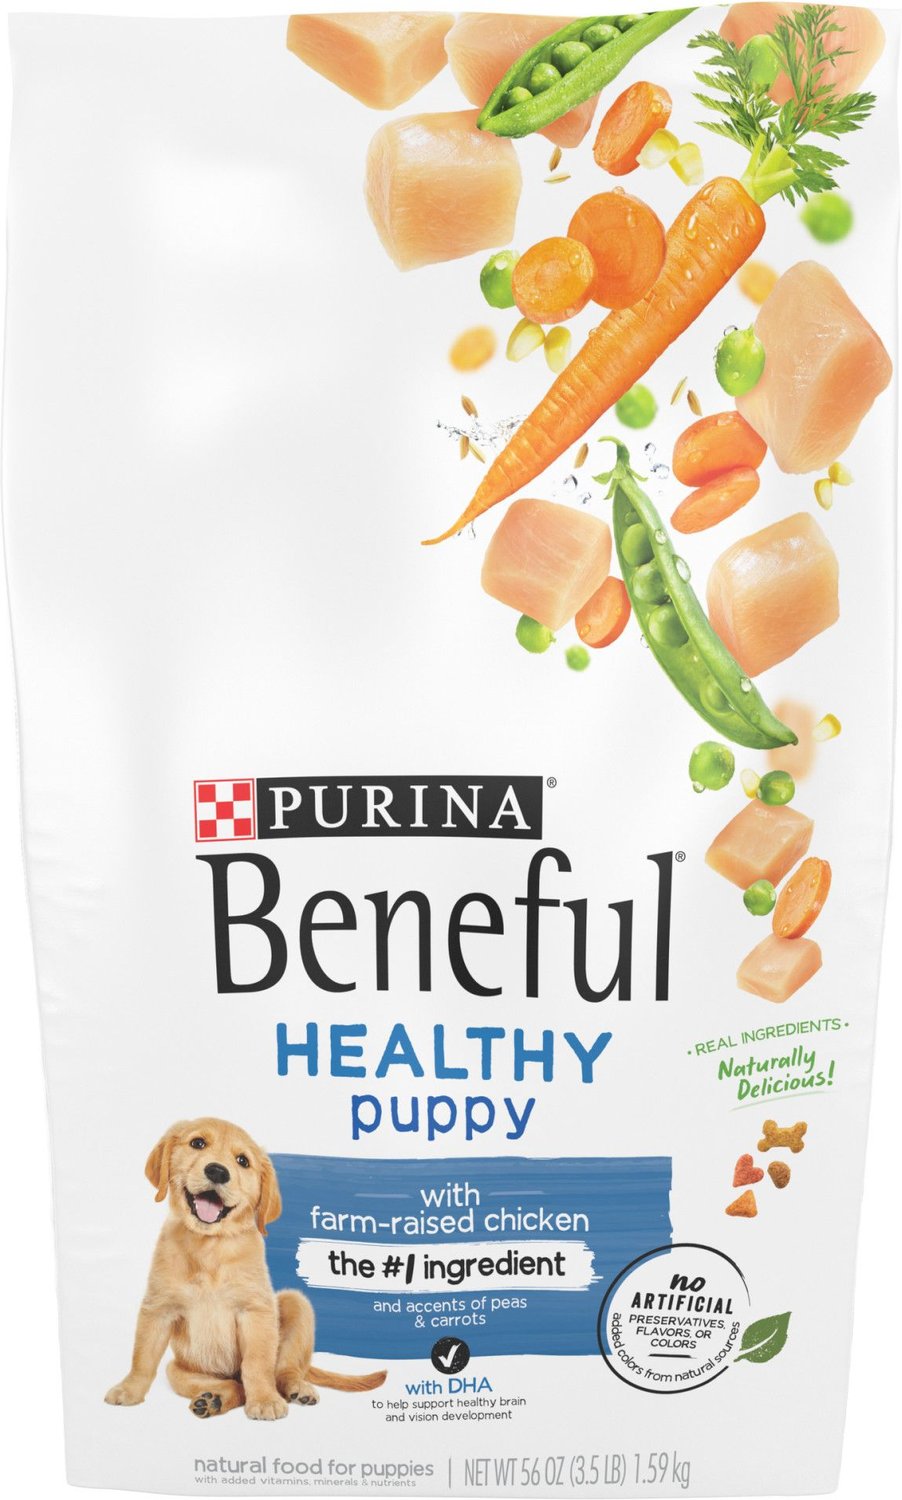 beneful dry dog food